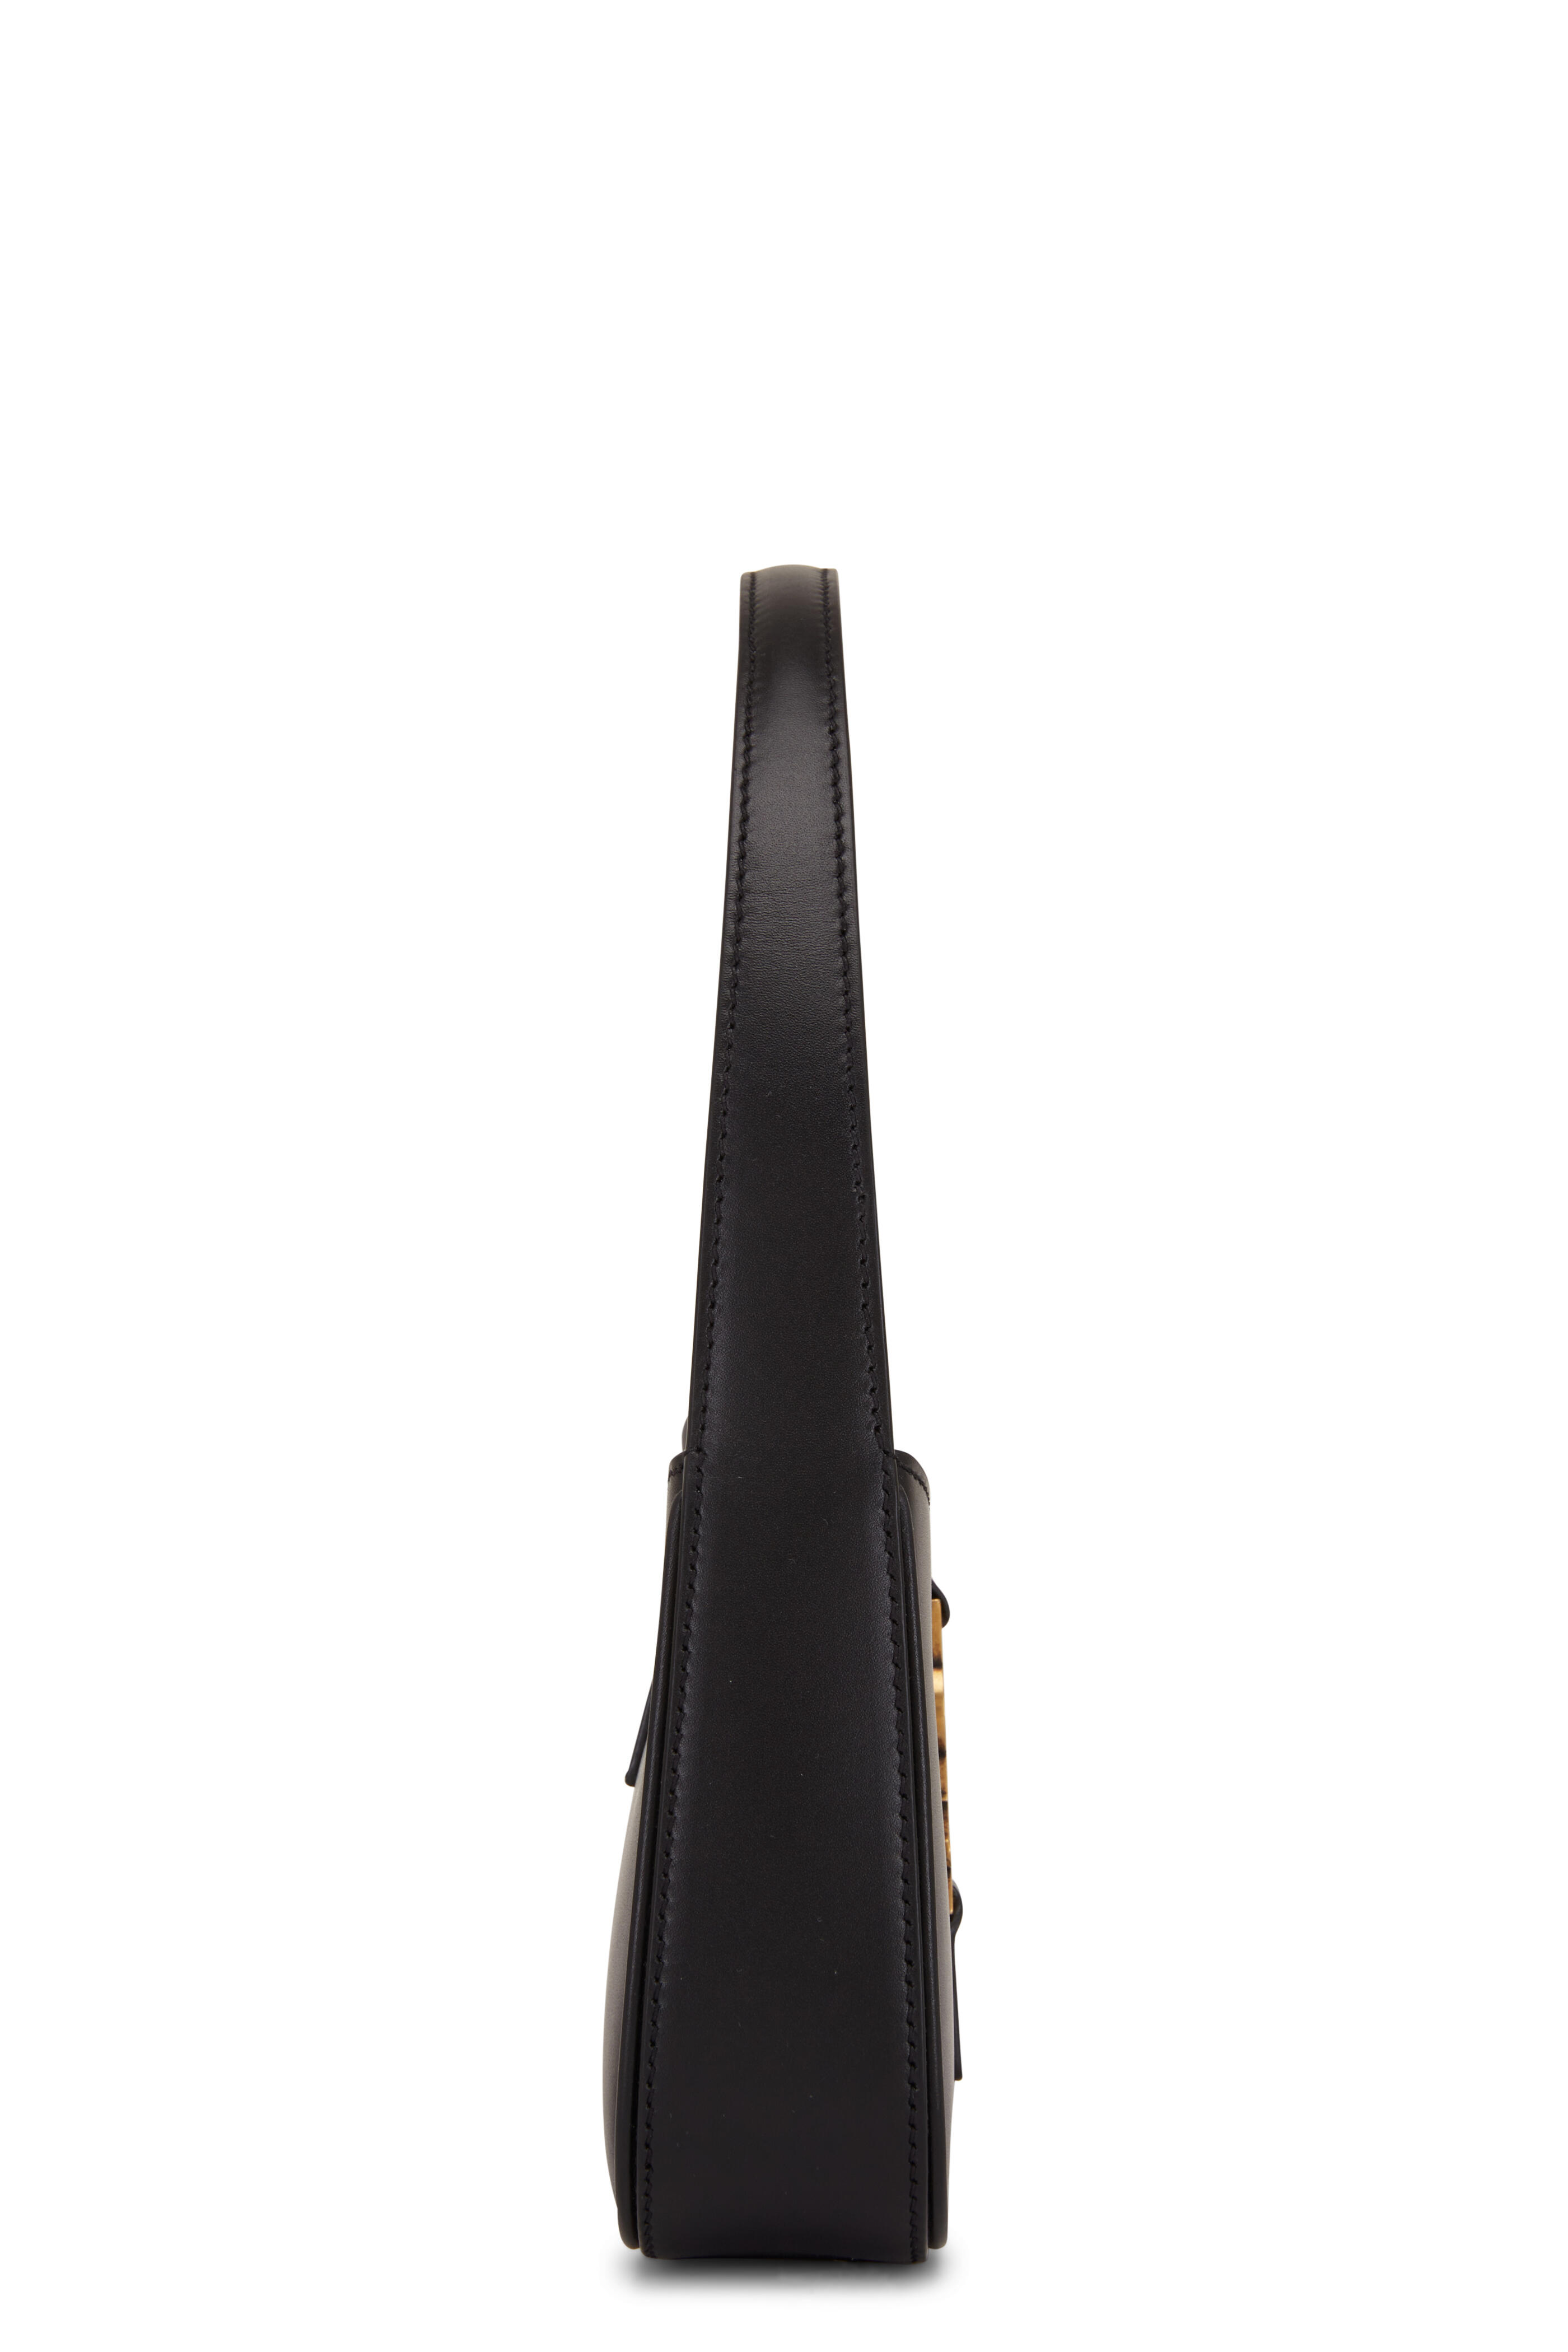 Saint Laurent - Black Smooth Leather Micro Hobo Shoulder Bag